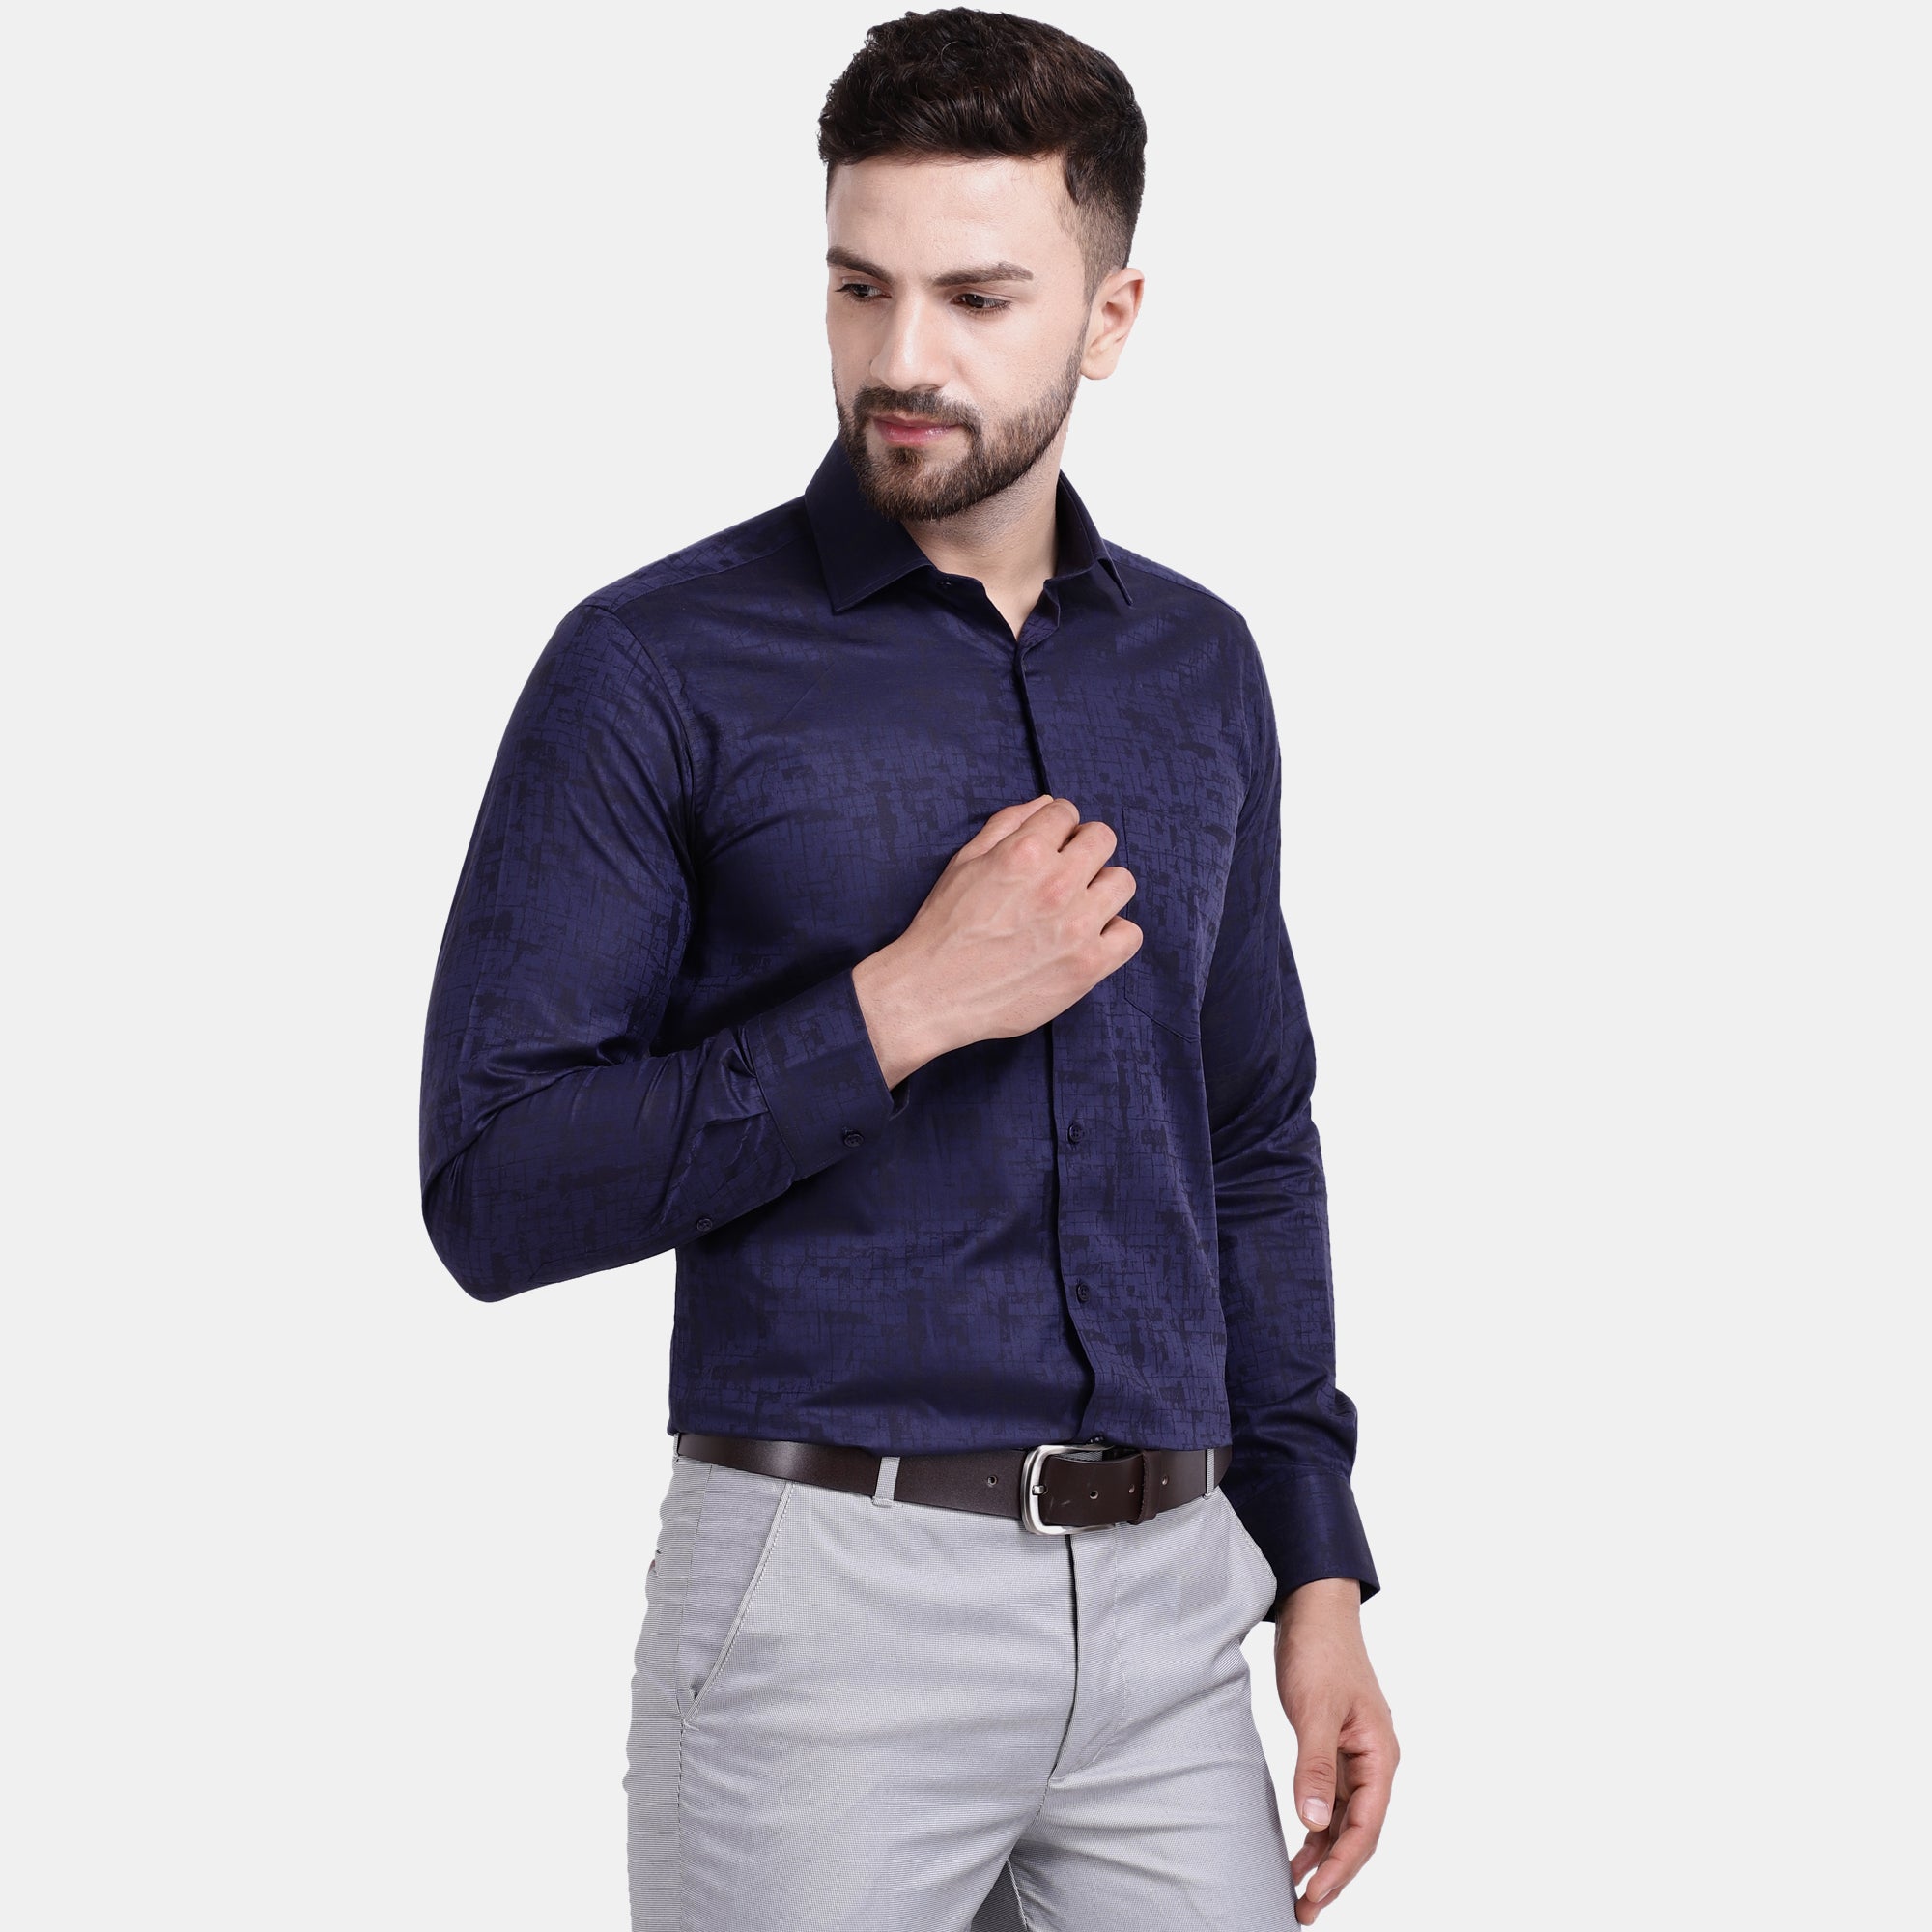 Men's Luthai Supima Mercerised Cotton Subtle Textured Abstract Jacquard Design Regular Fit Shirt